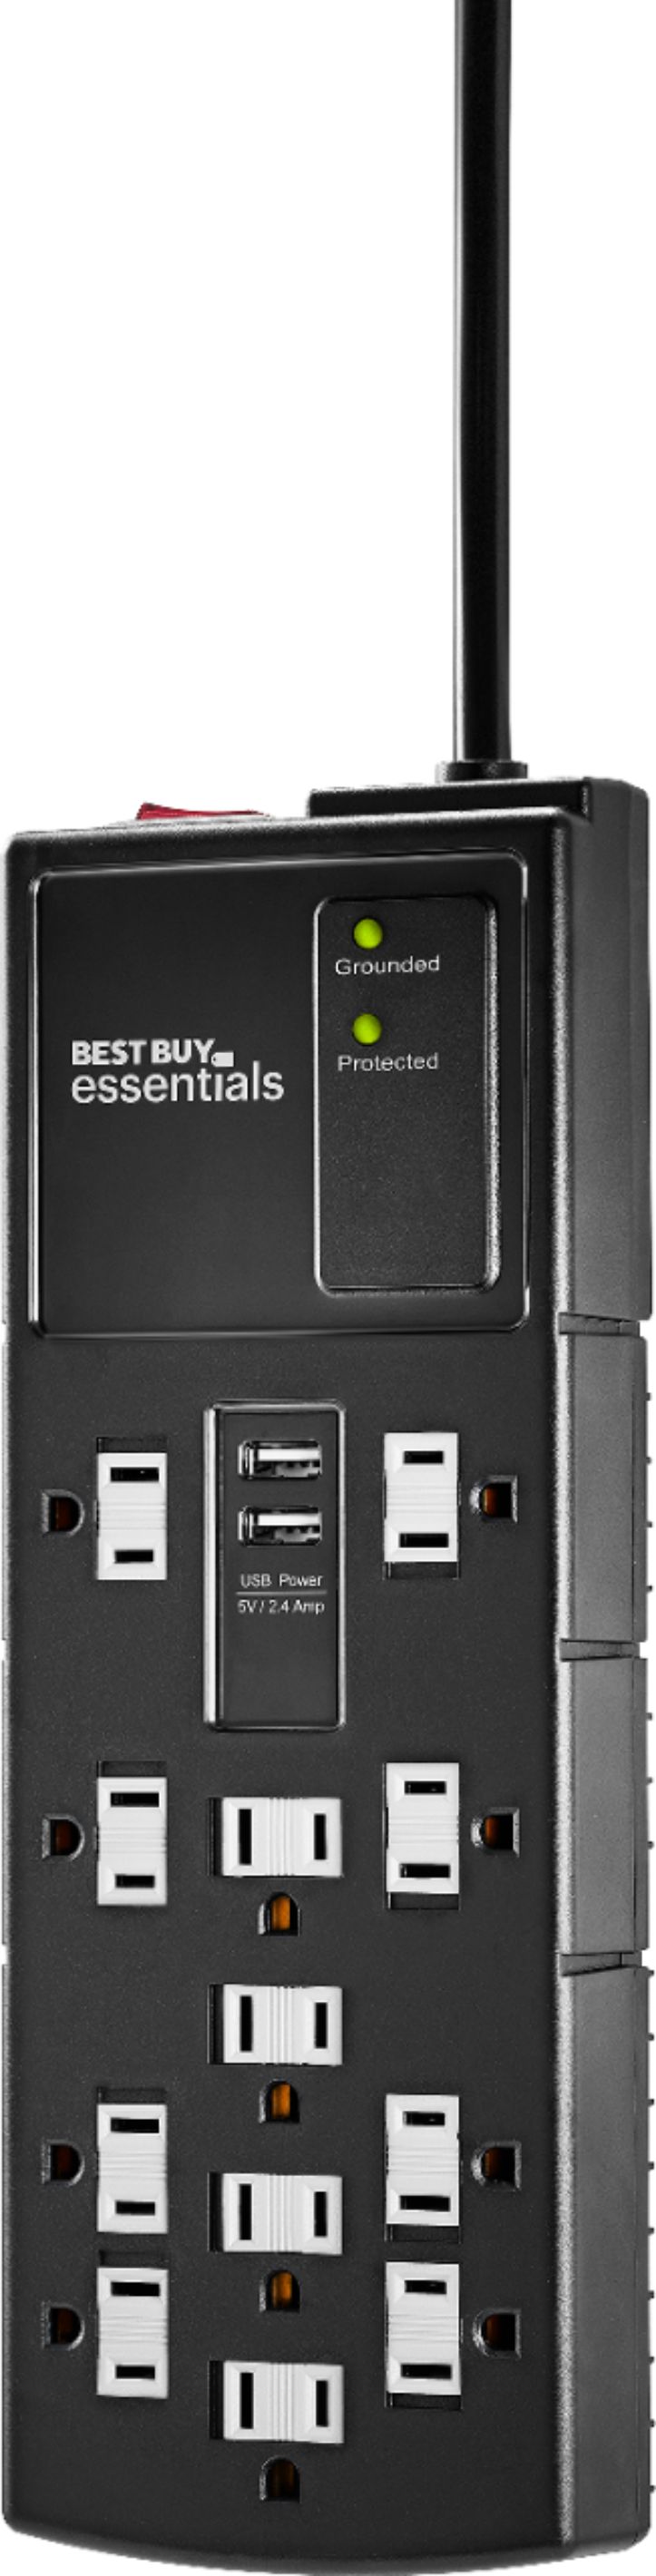 Best Buy essentials™ - 12-Outlet/2-USB Surge Protector Strip - Black